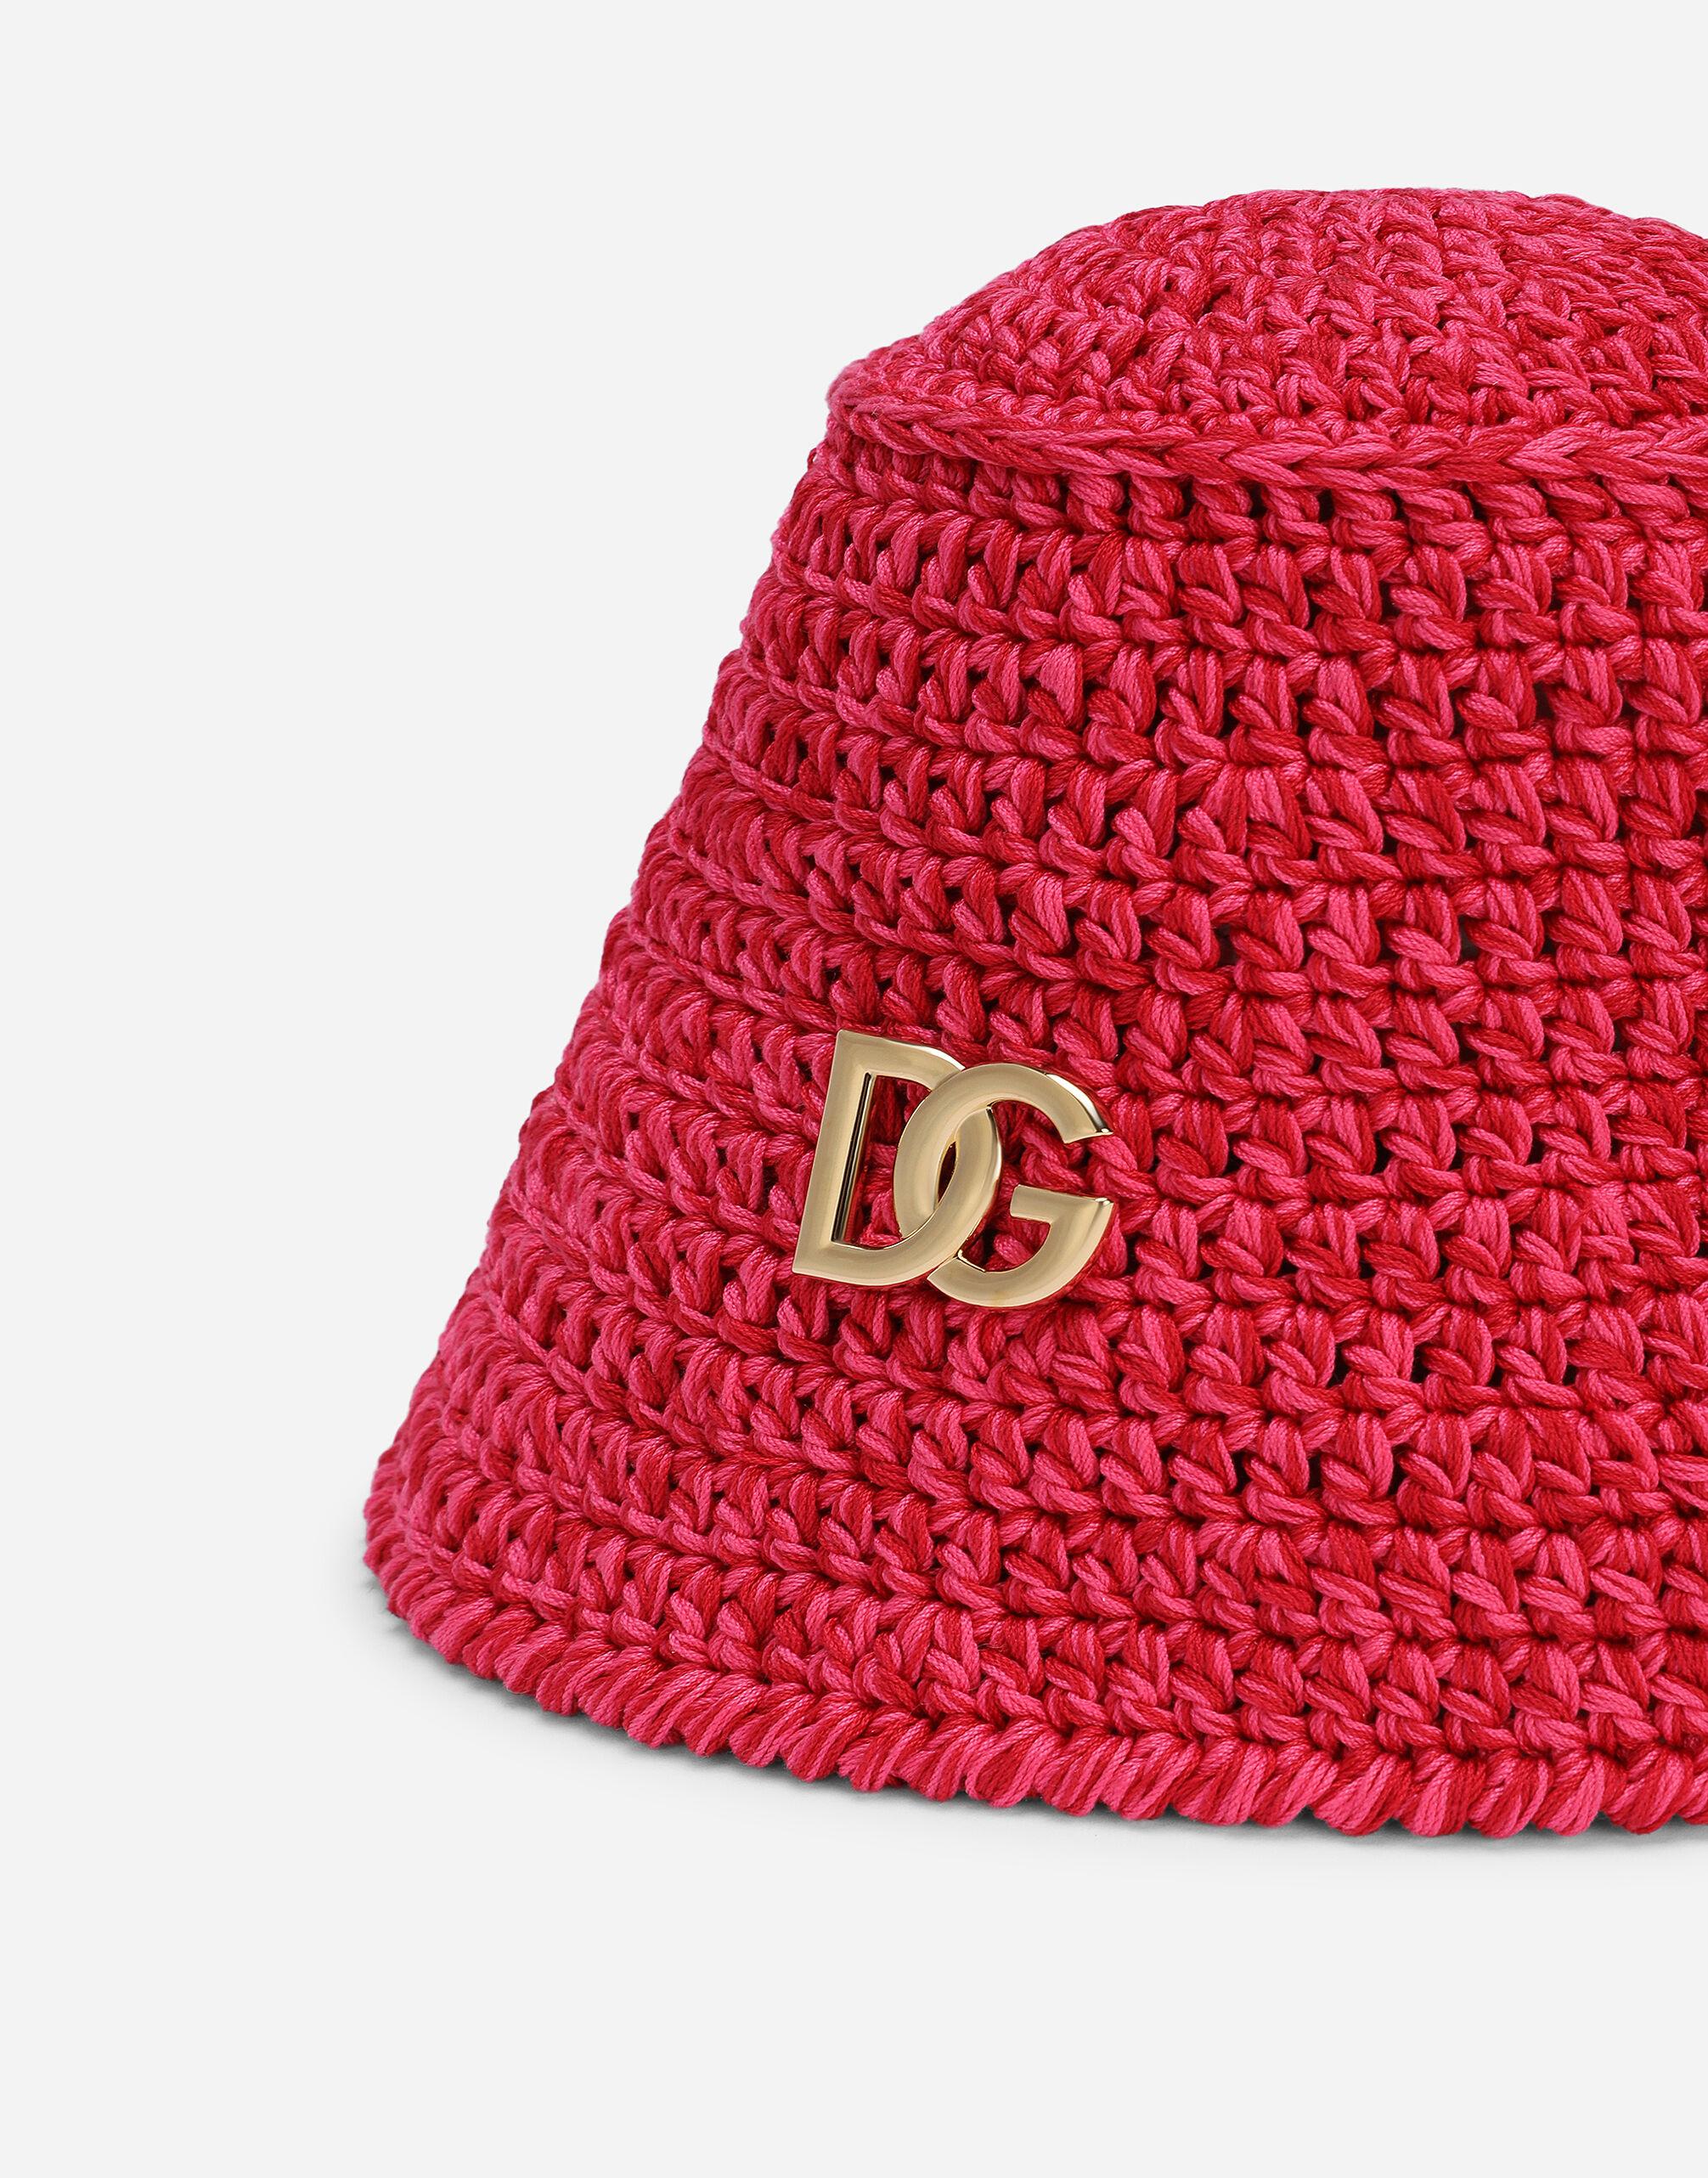 Dolce & Gabbana Crochet Bucket Hat in Pink Red Womens Hats Dolce & Gabbana Hats 